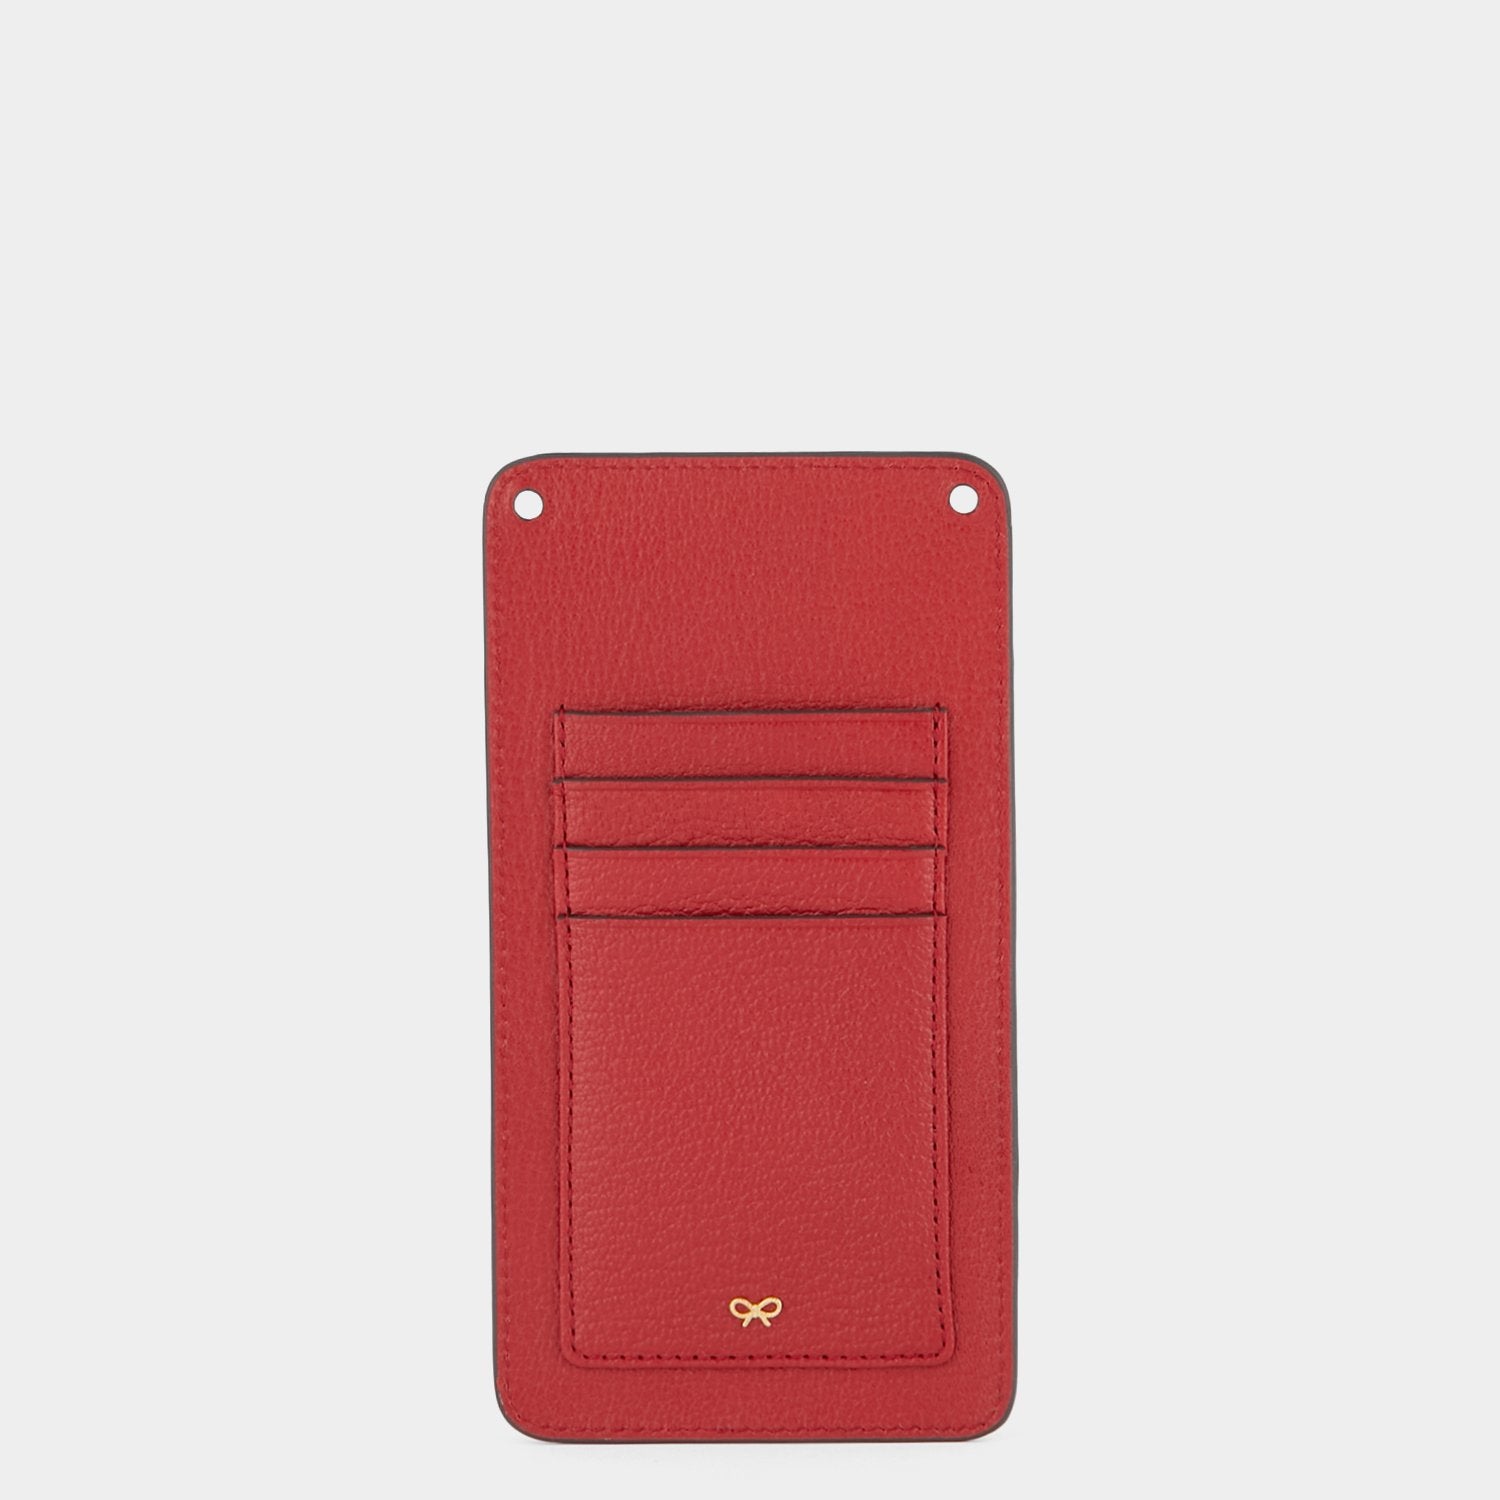 lv card holder phone case